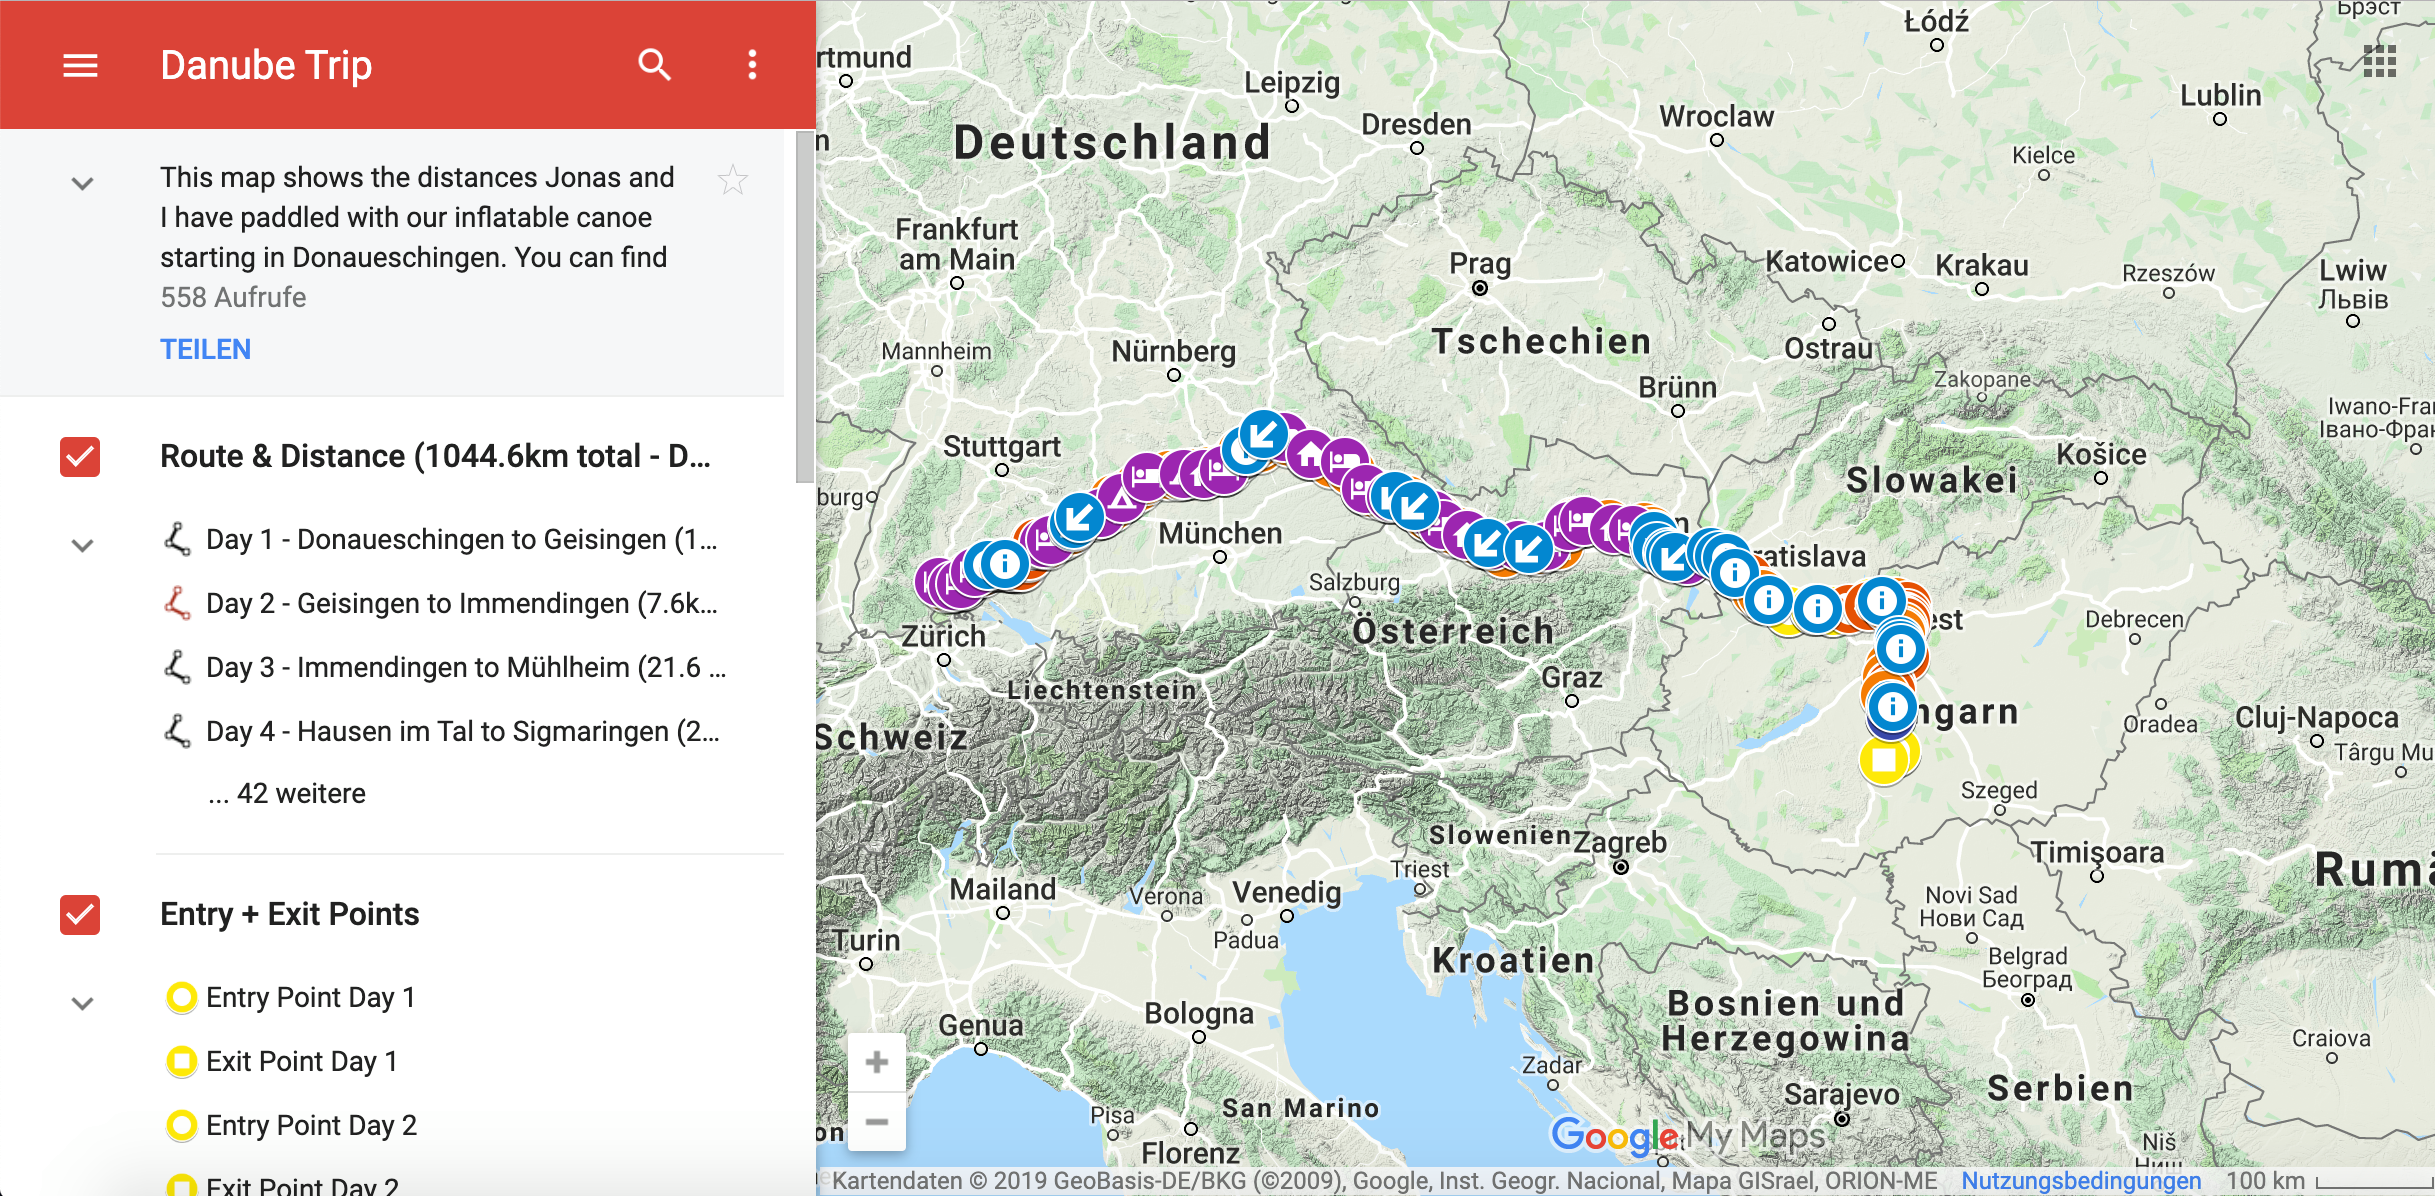 interactive map kayak canoe trip danube river europe work digital nomad